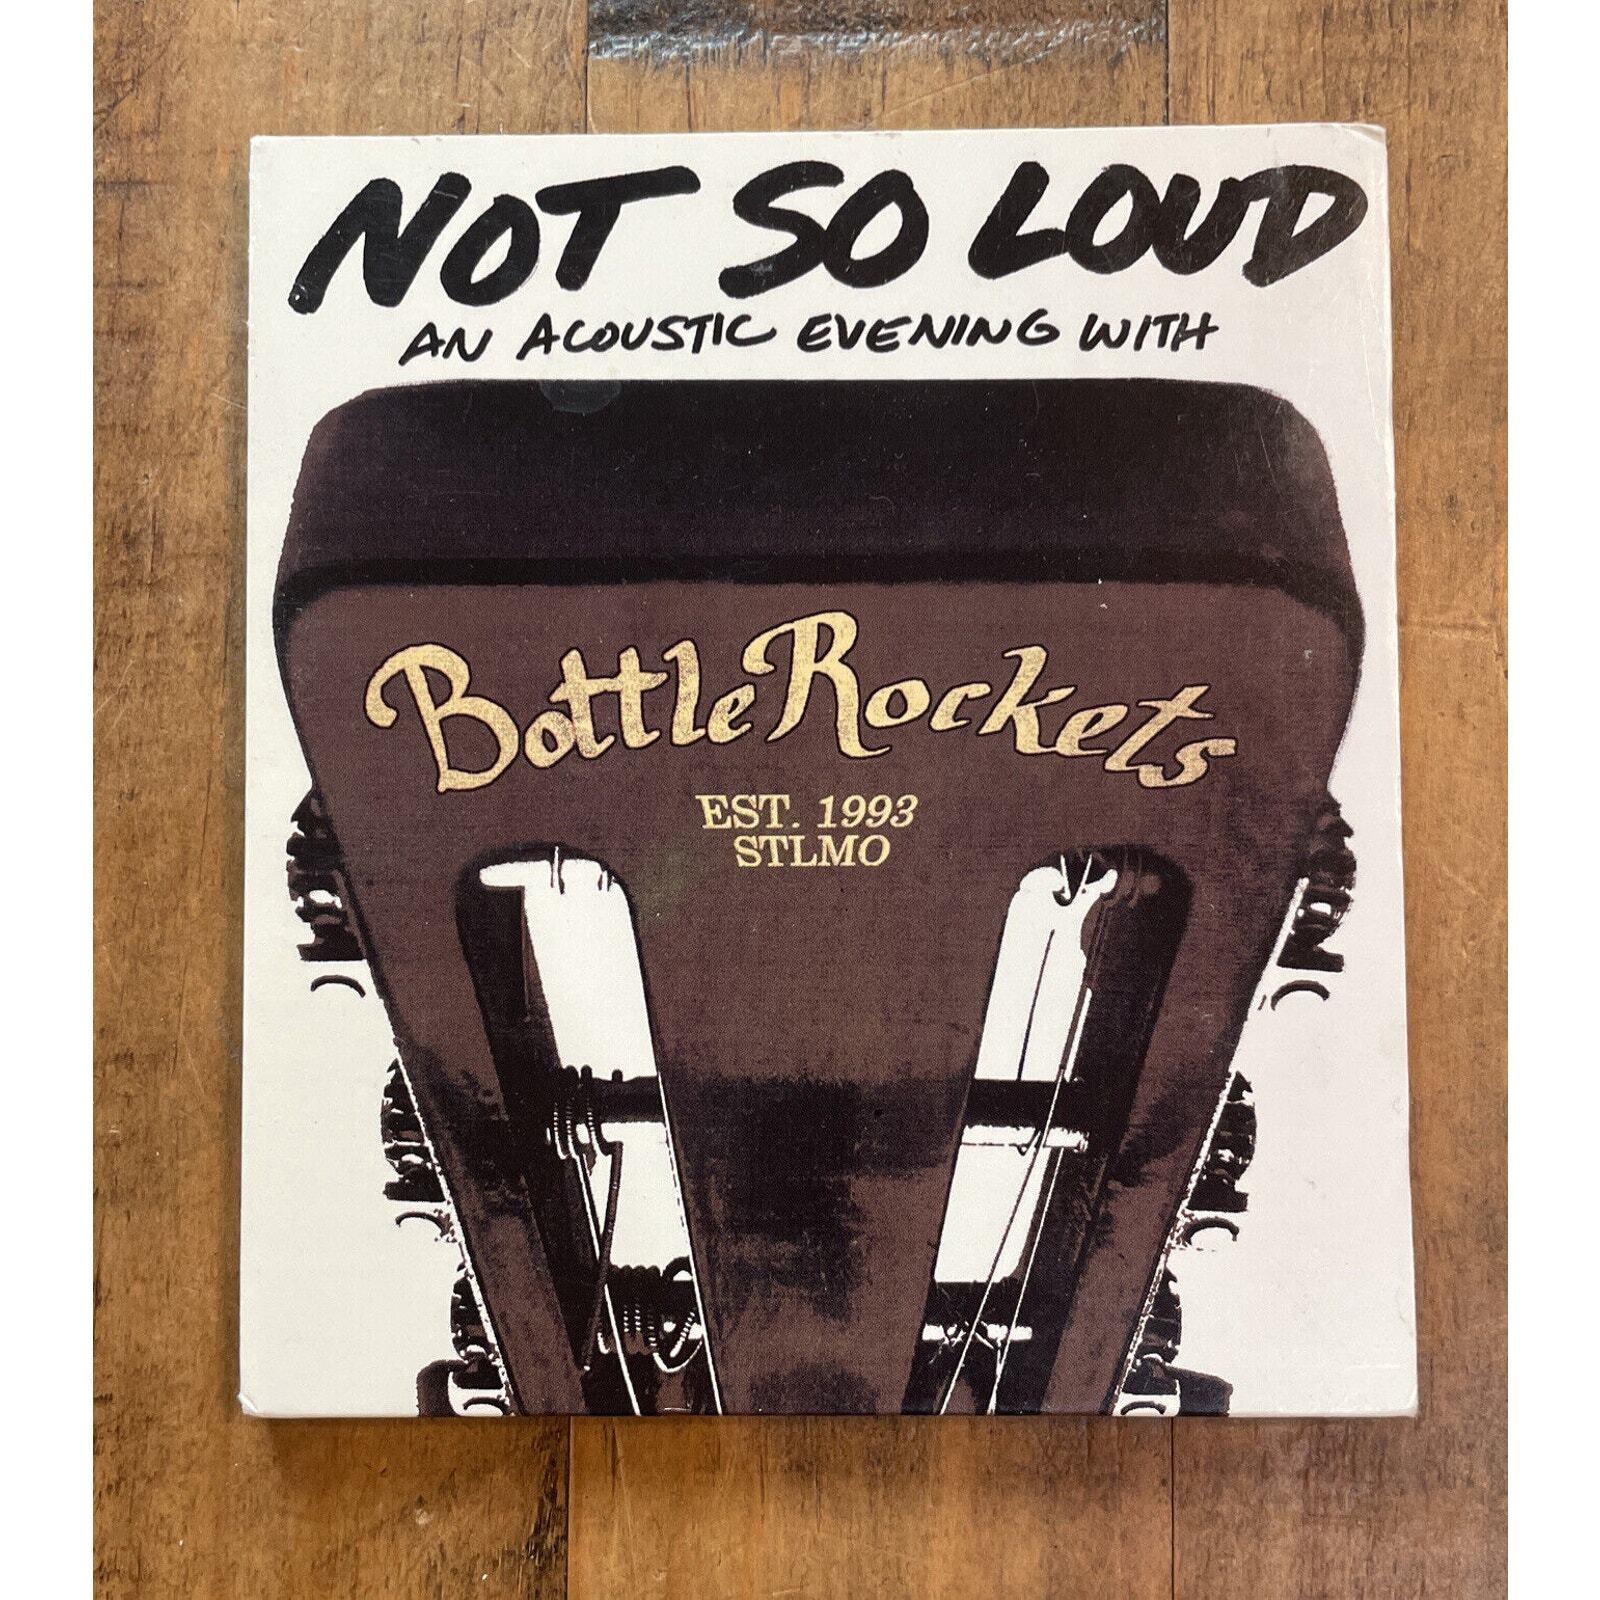 The Bottle Rockets - Not So Loud - CD Excellent